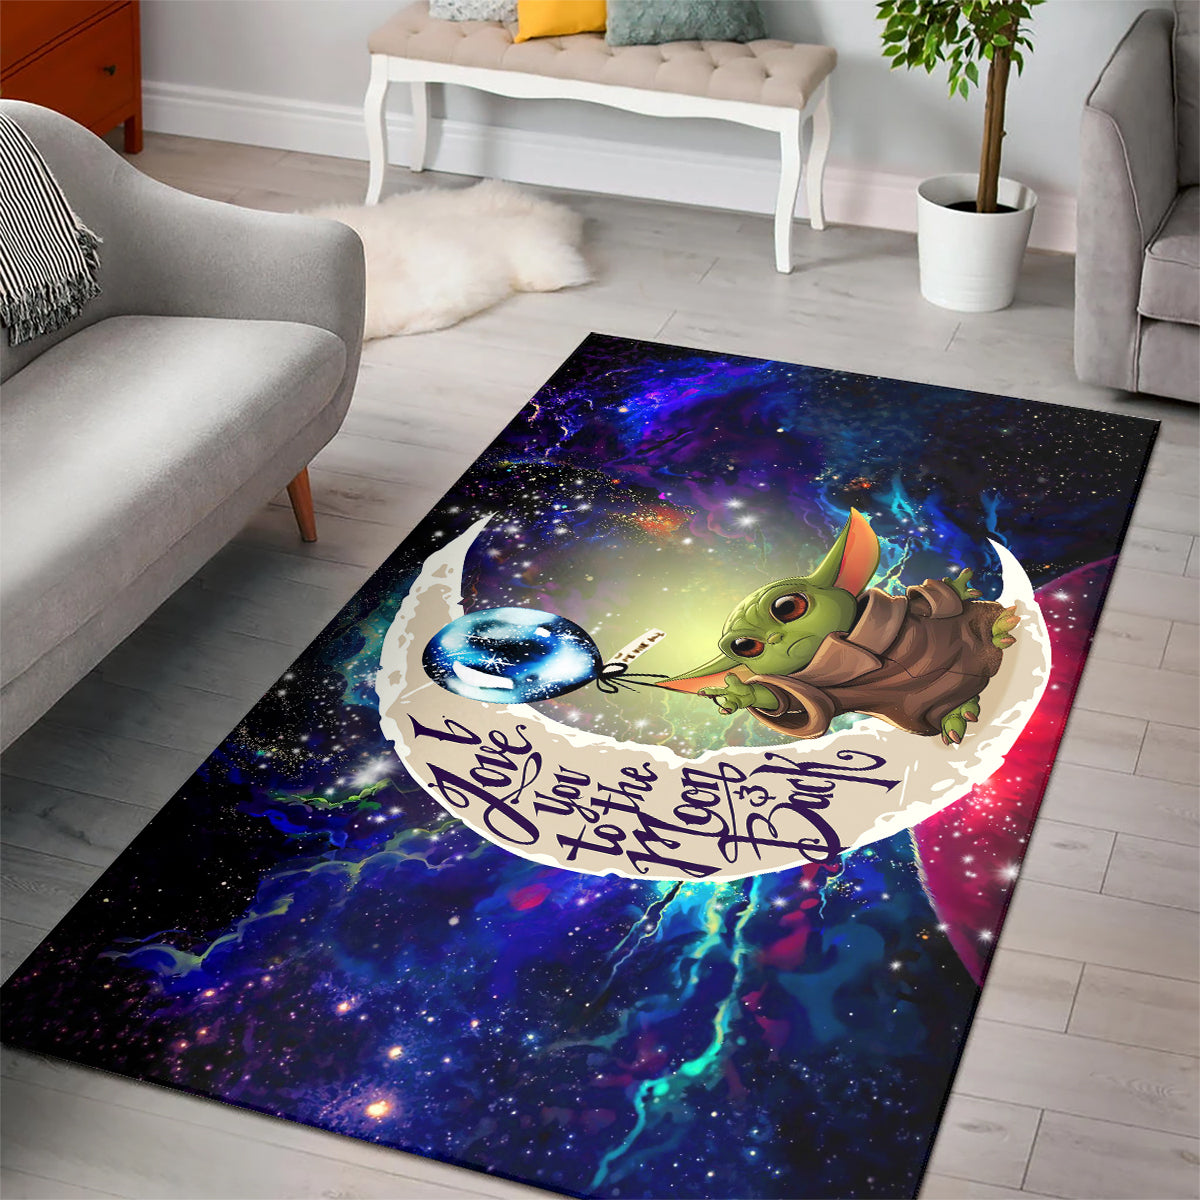 Baby Yoda Love You To The Moon Galaxy Carpet Rug Home Room Decor